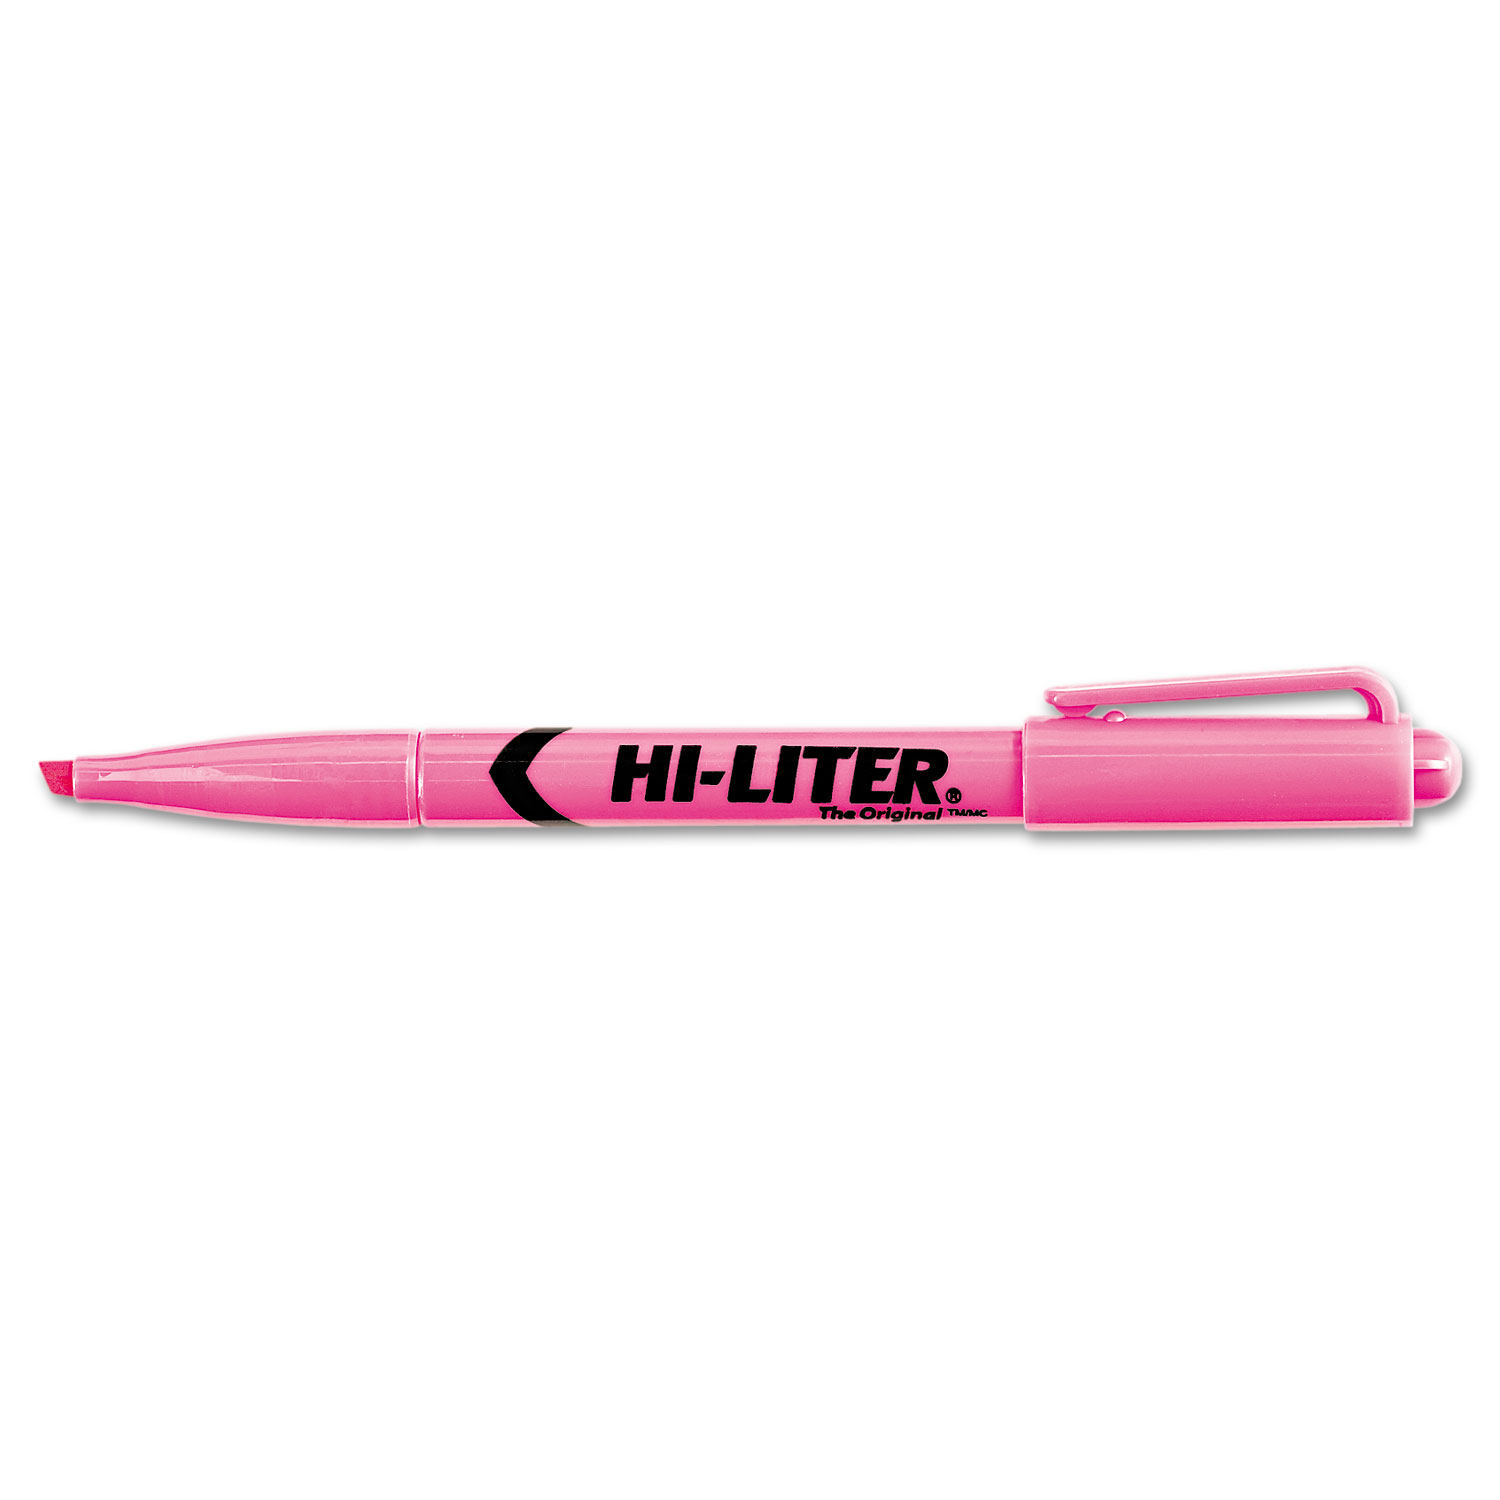  Avery 23592 HI-LITER Pen-Style Highlighters, Chisel Tip, Fluorescent Pink, Dozen (AVE23592) 